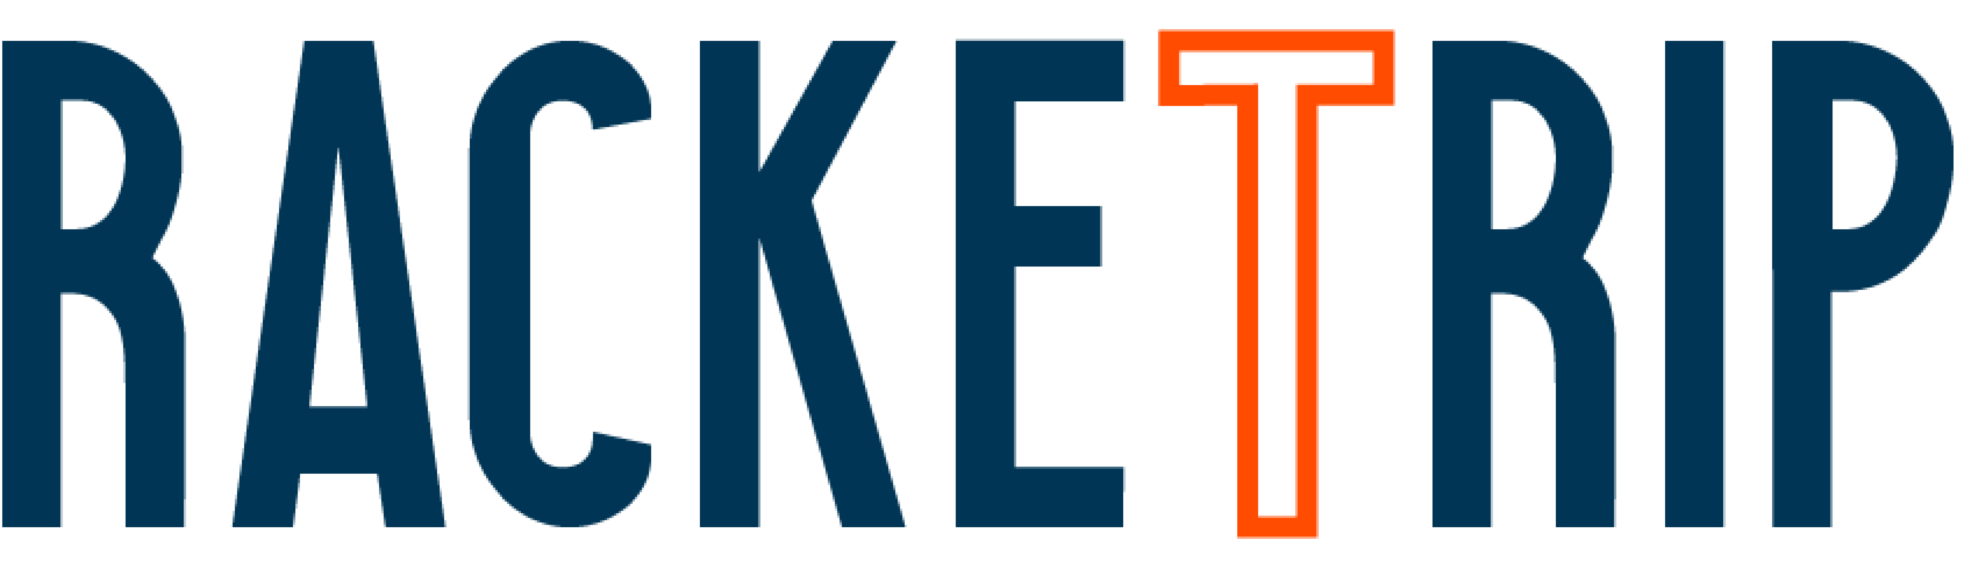 logo-racketrip-blau